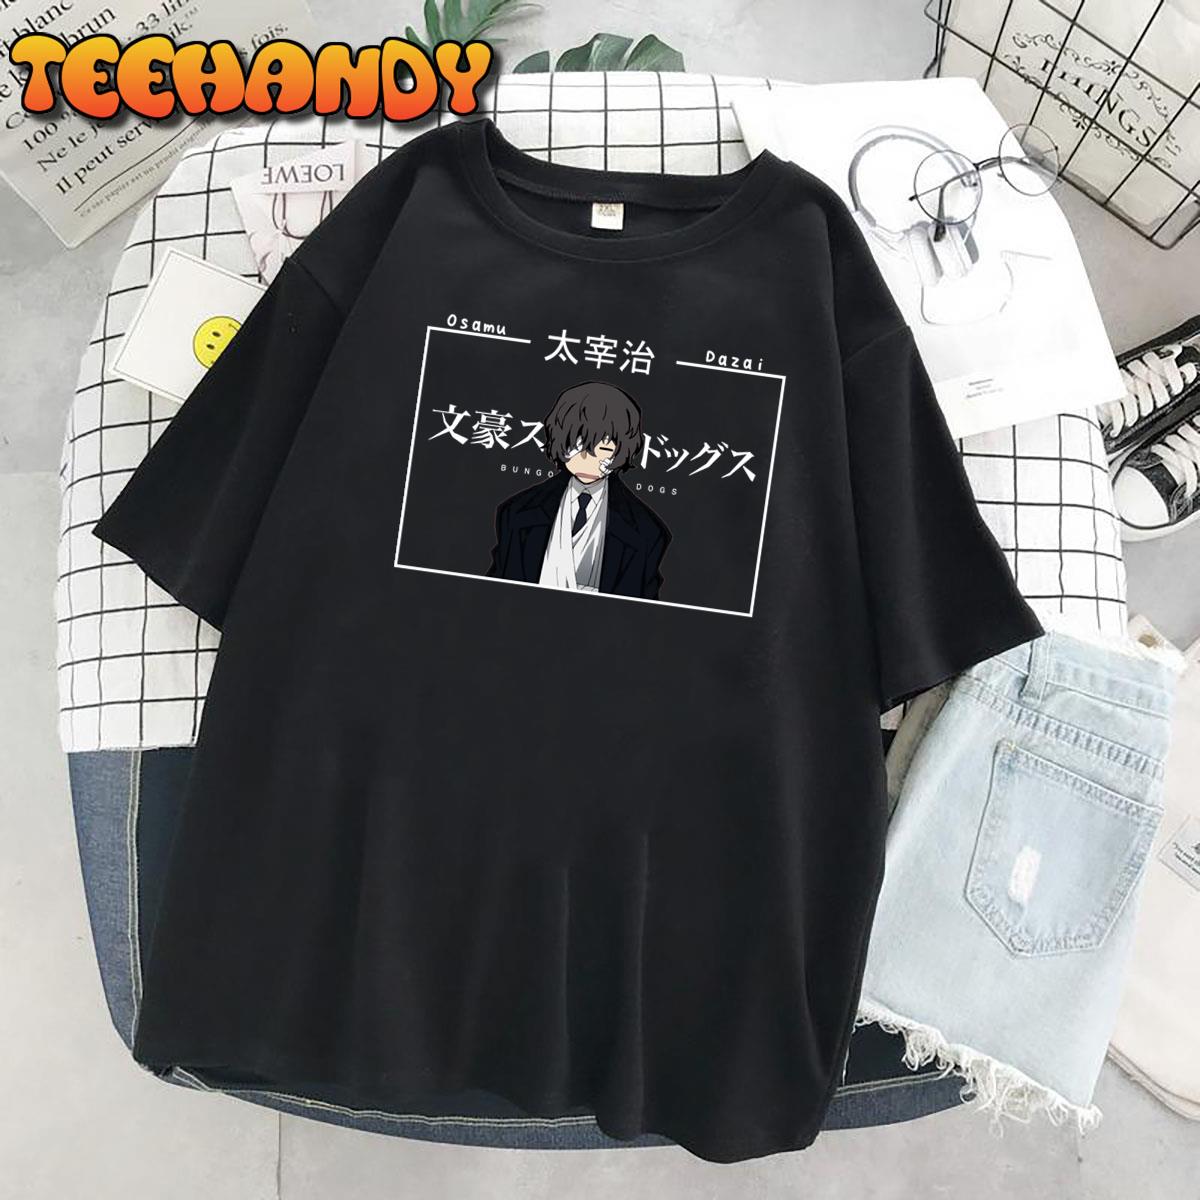 Dazai Osamu Bungou Stray Dogs Anime Unisex T-Shirt